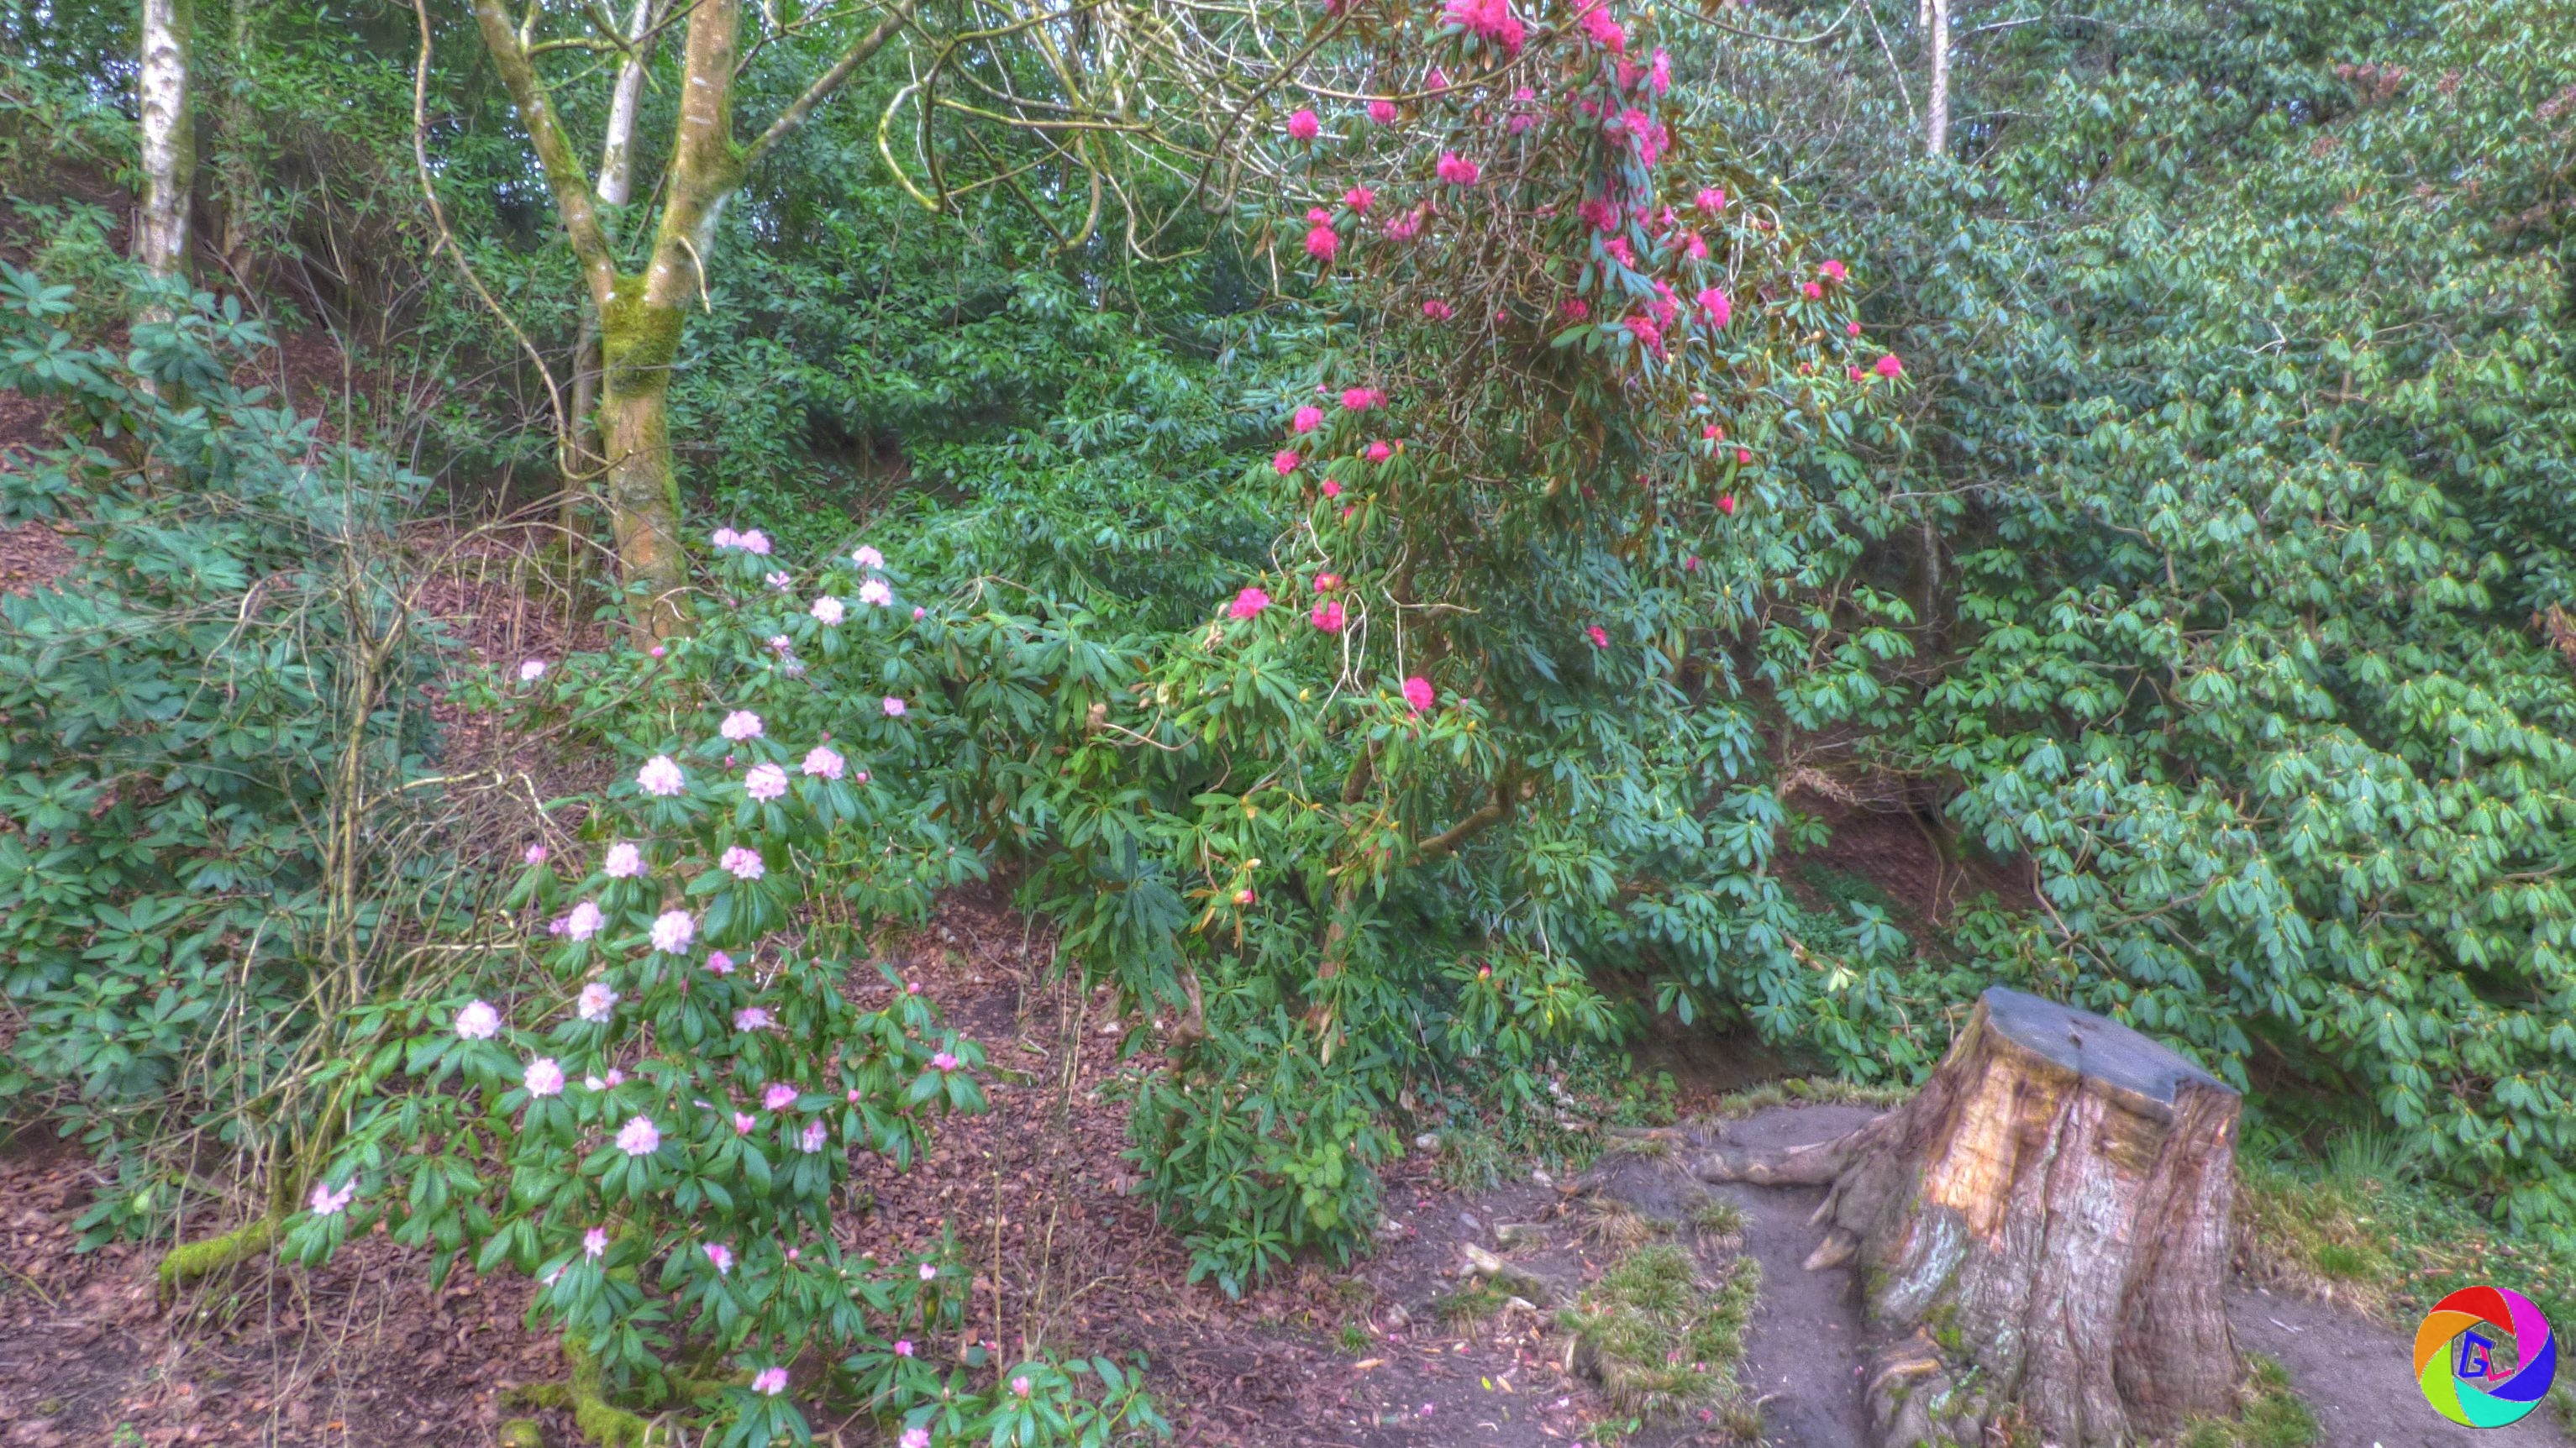 Rhododendra in bloom in January